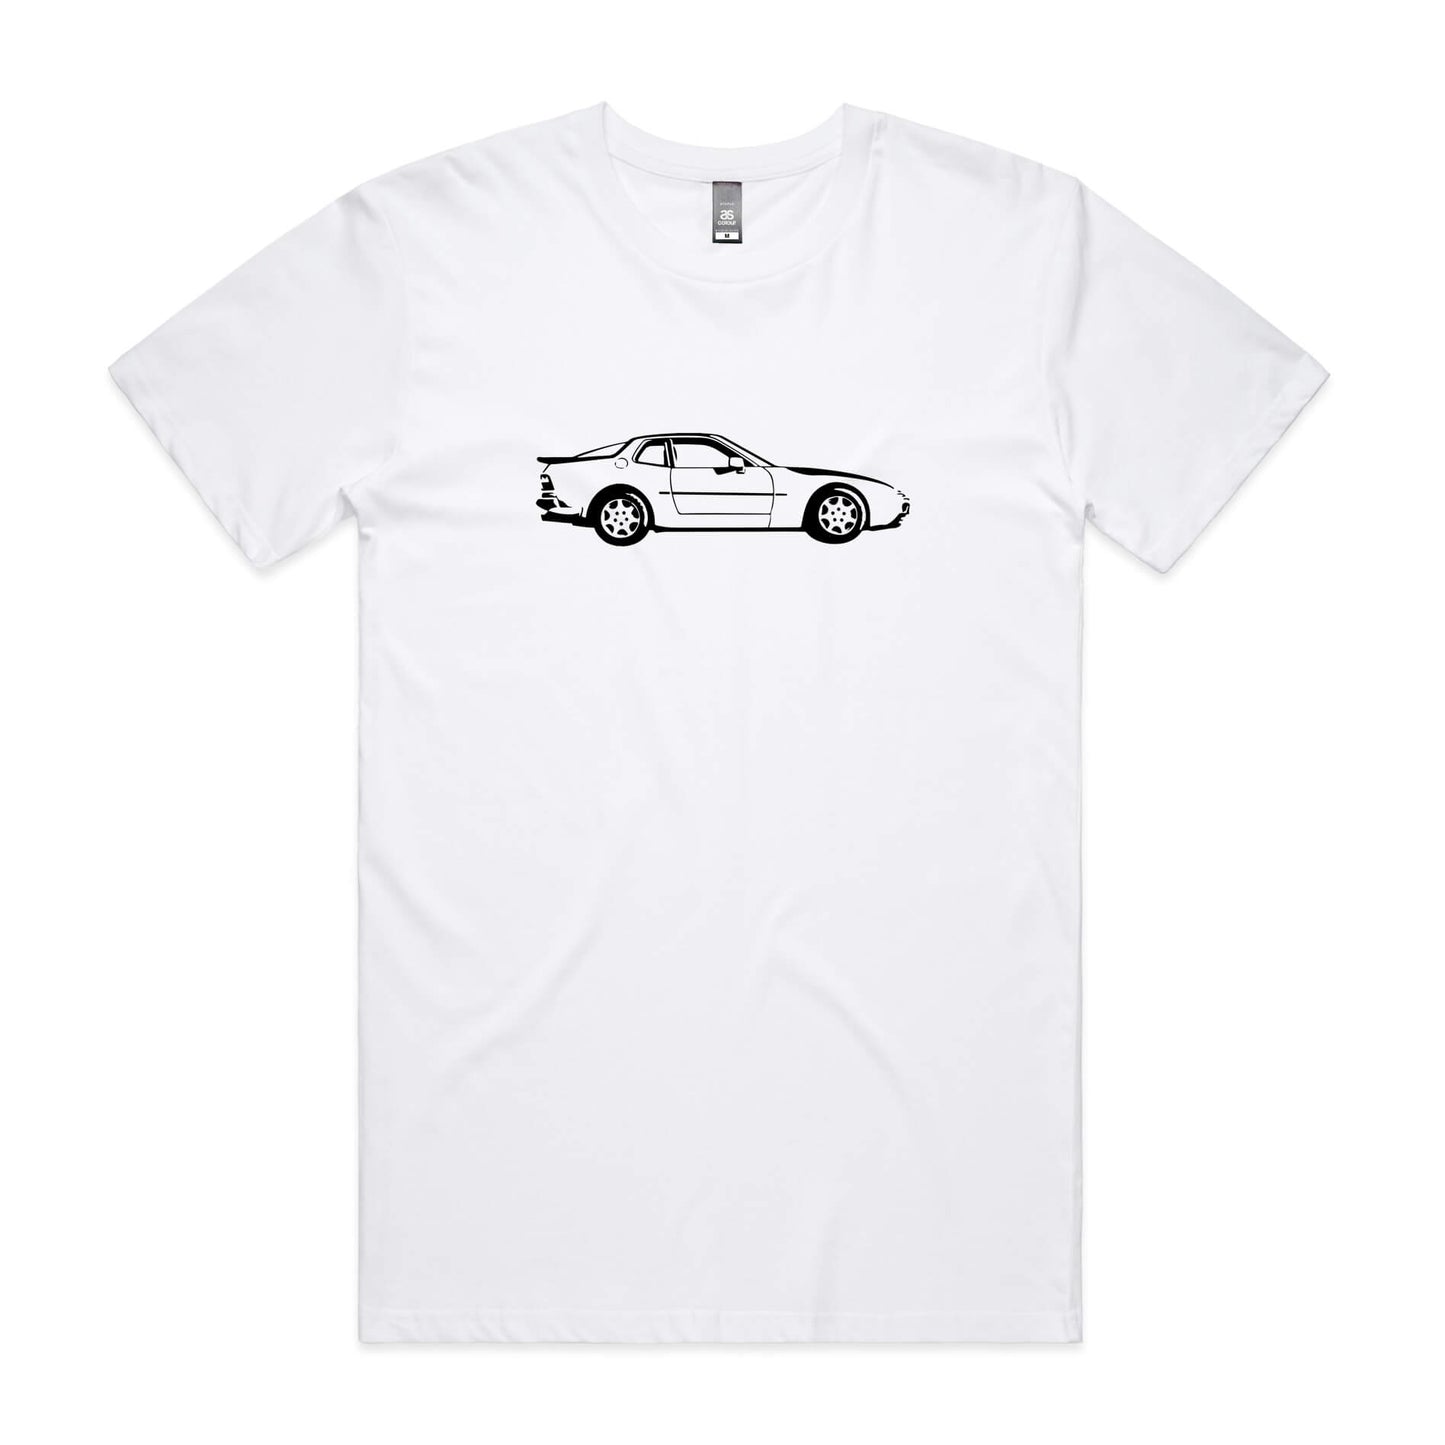 Porsche 944 t-shirt in white with black car graphic